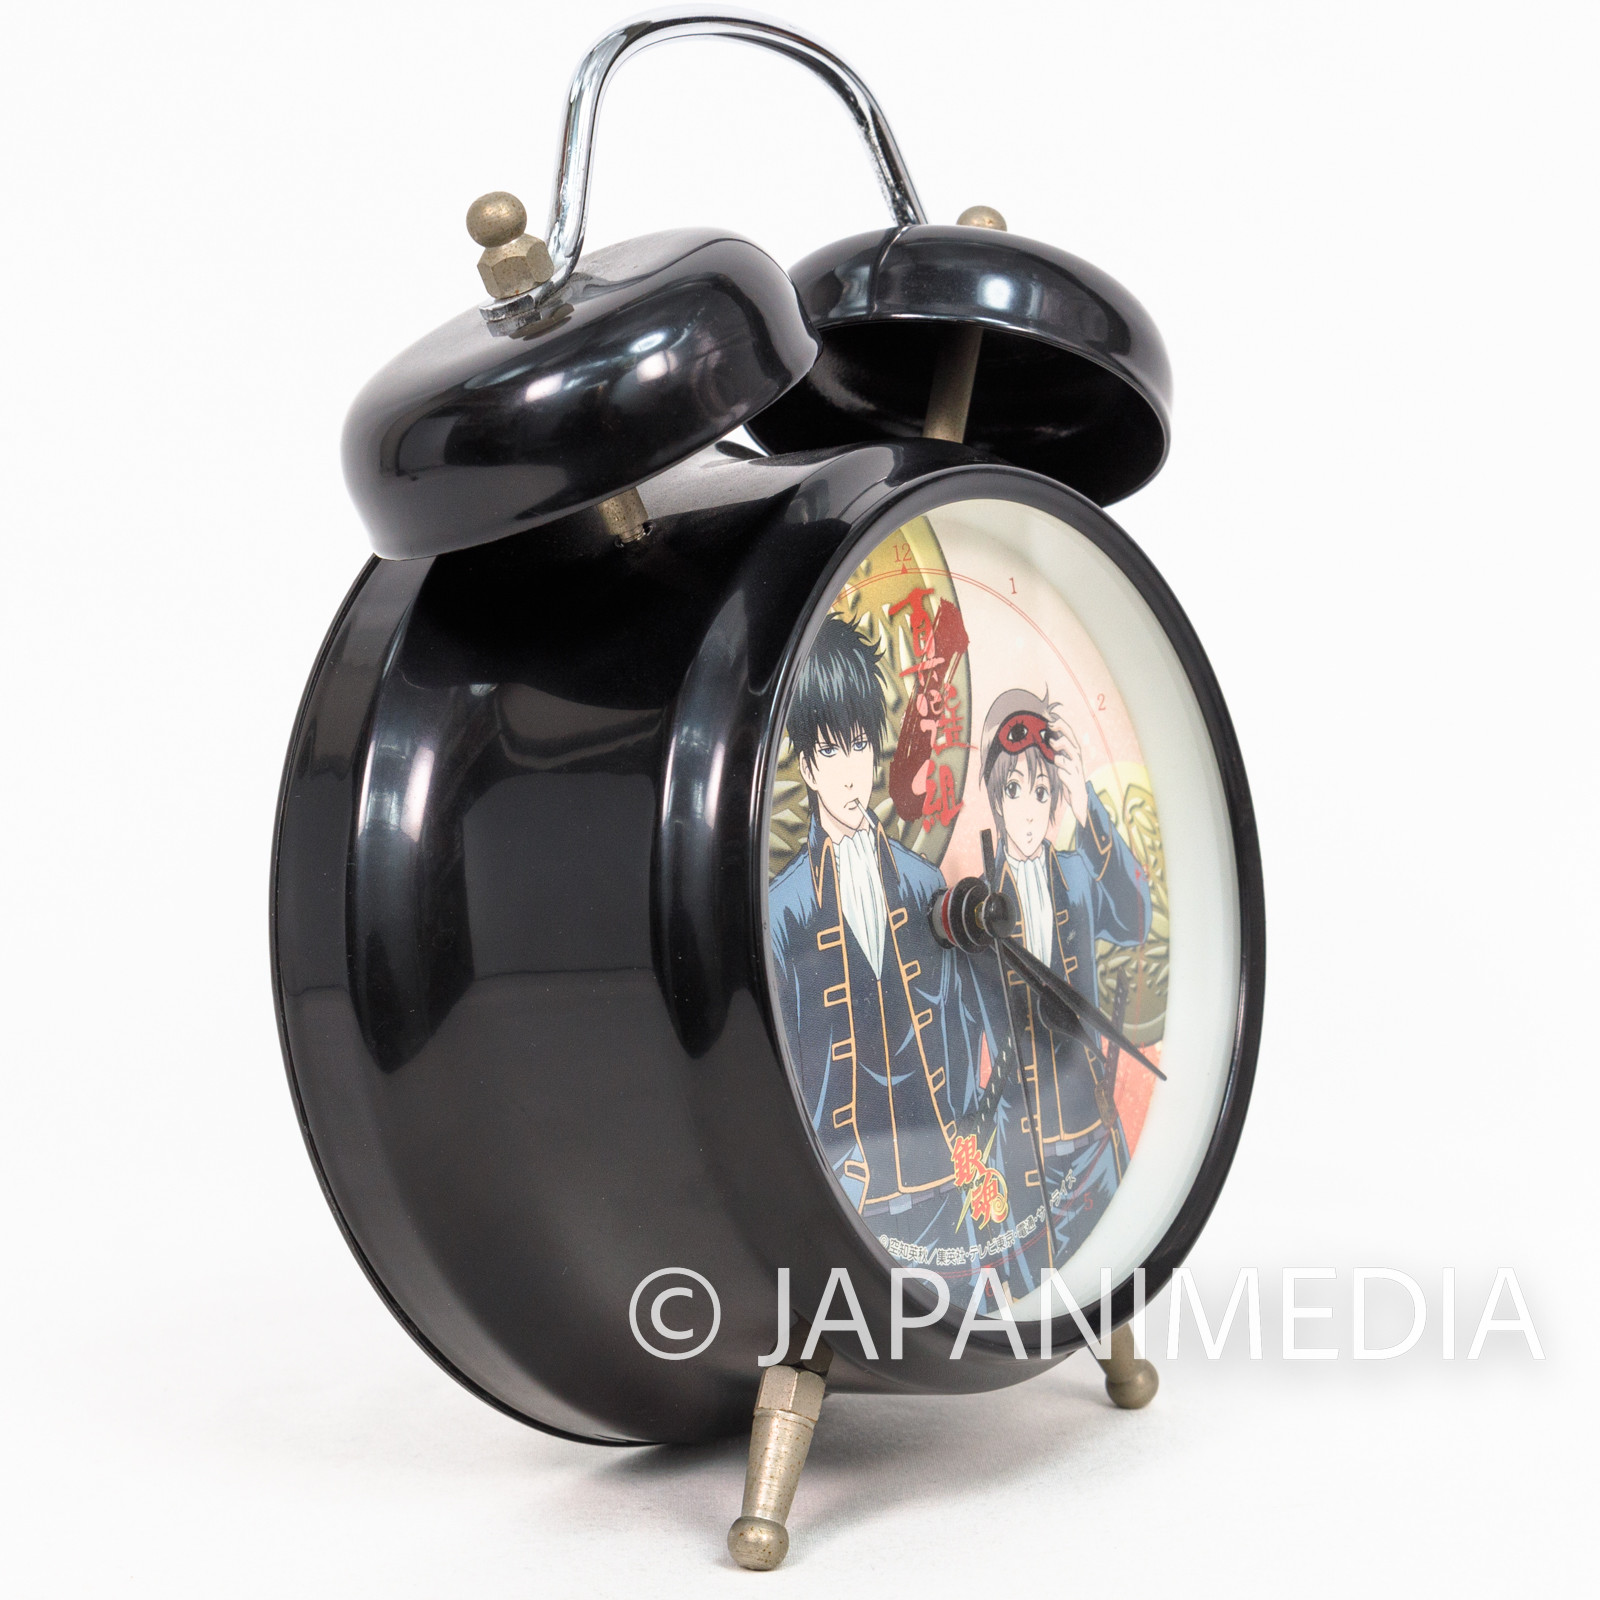 Gintama Hijikata & Okita Voice Alarm Clock JAPAN ANIME